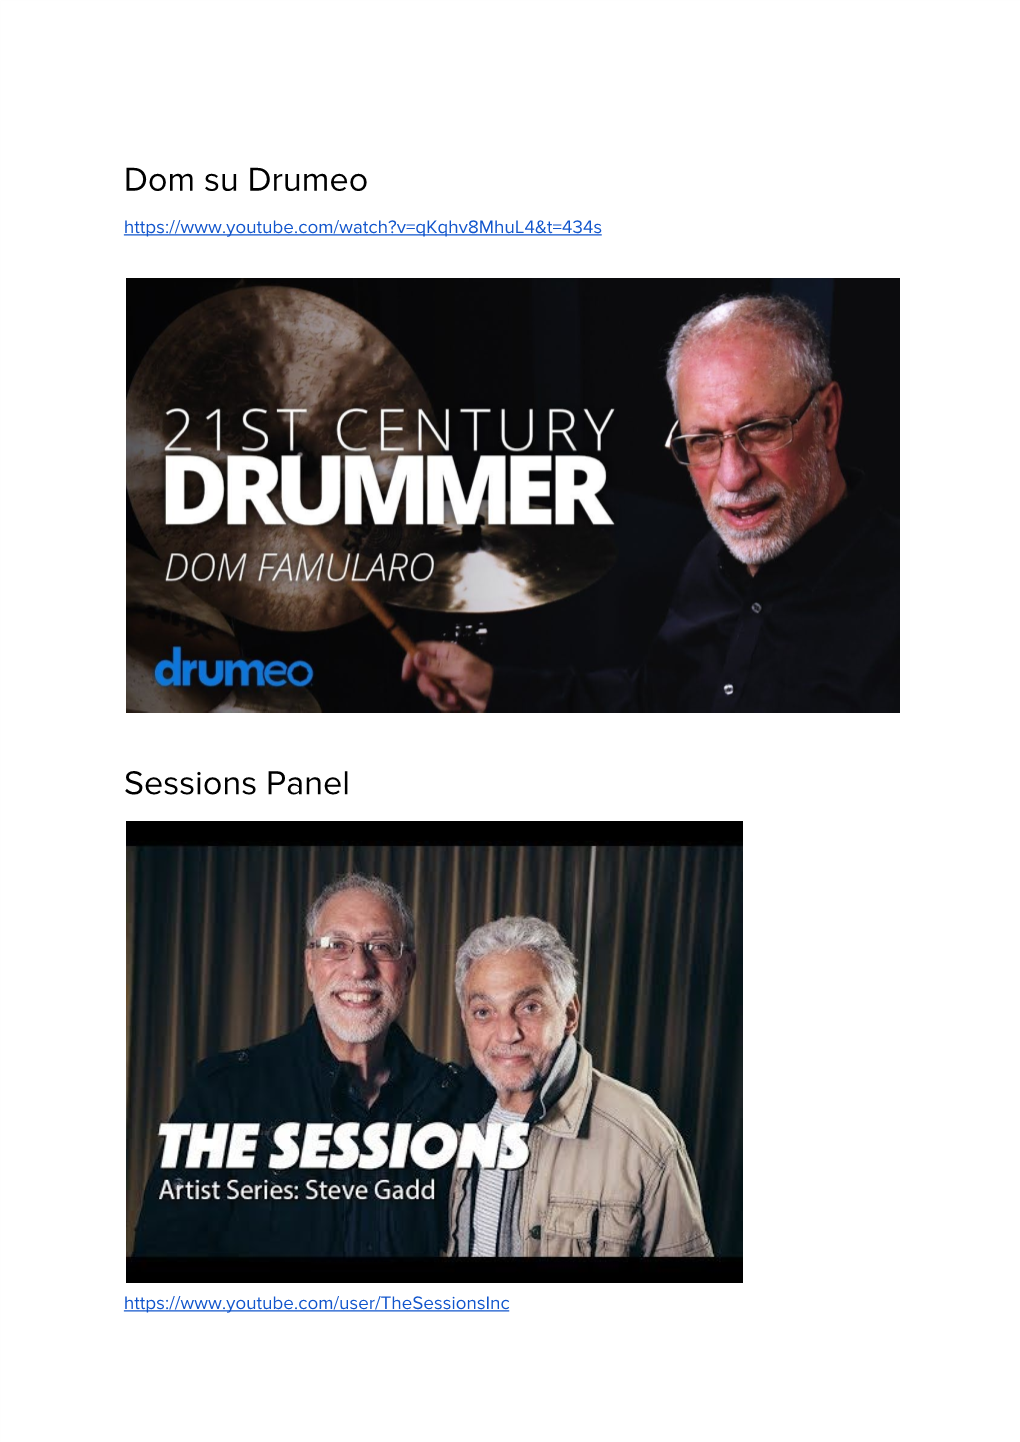 Dom Su Drumeo Sessions Panel